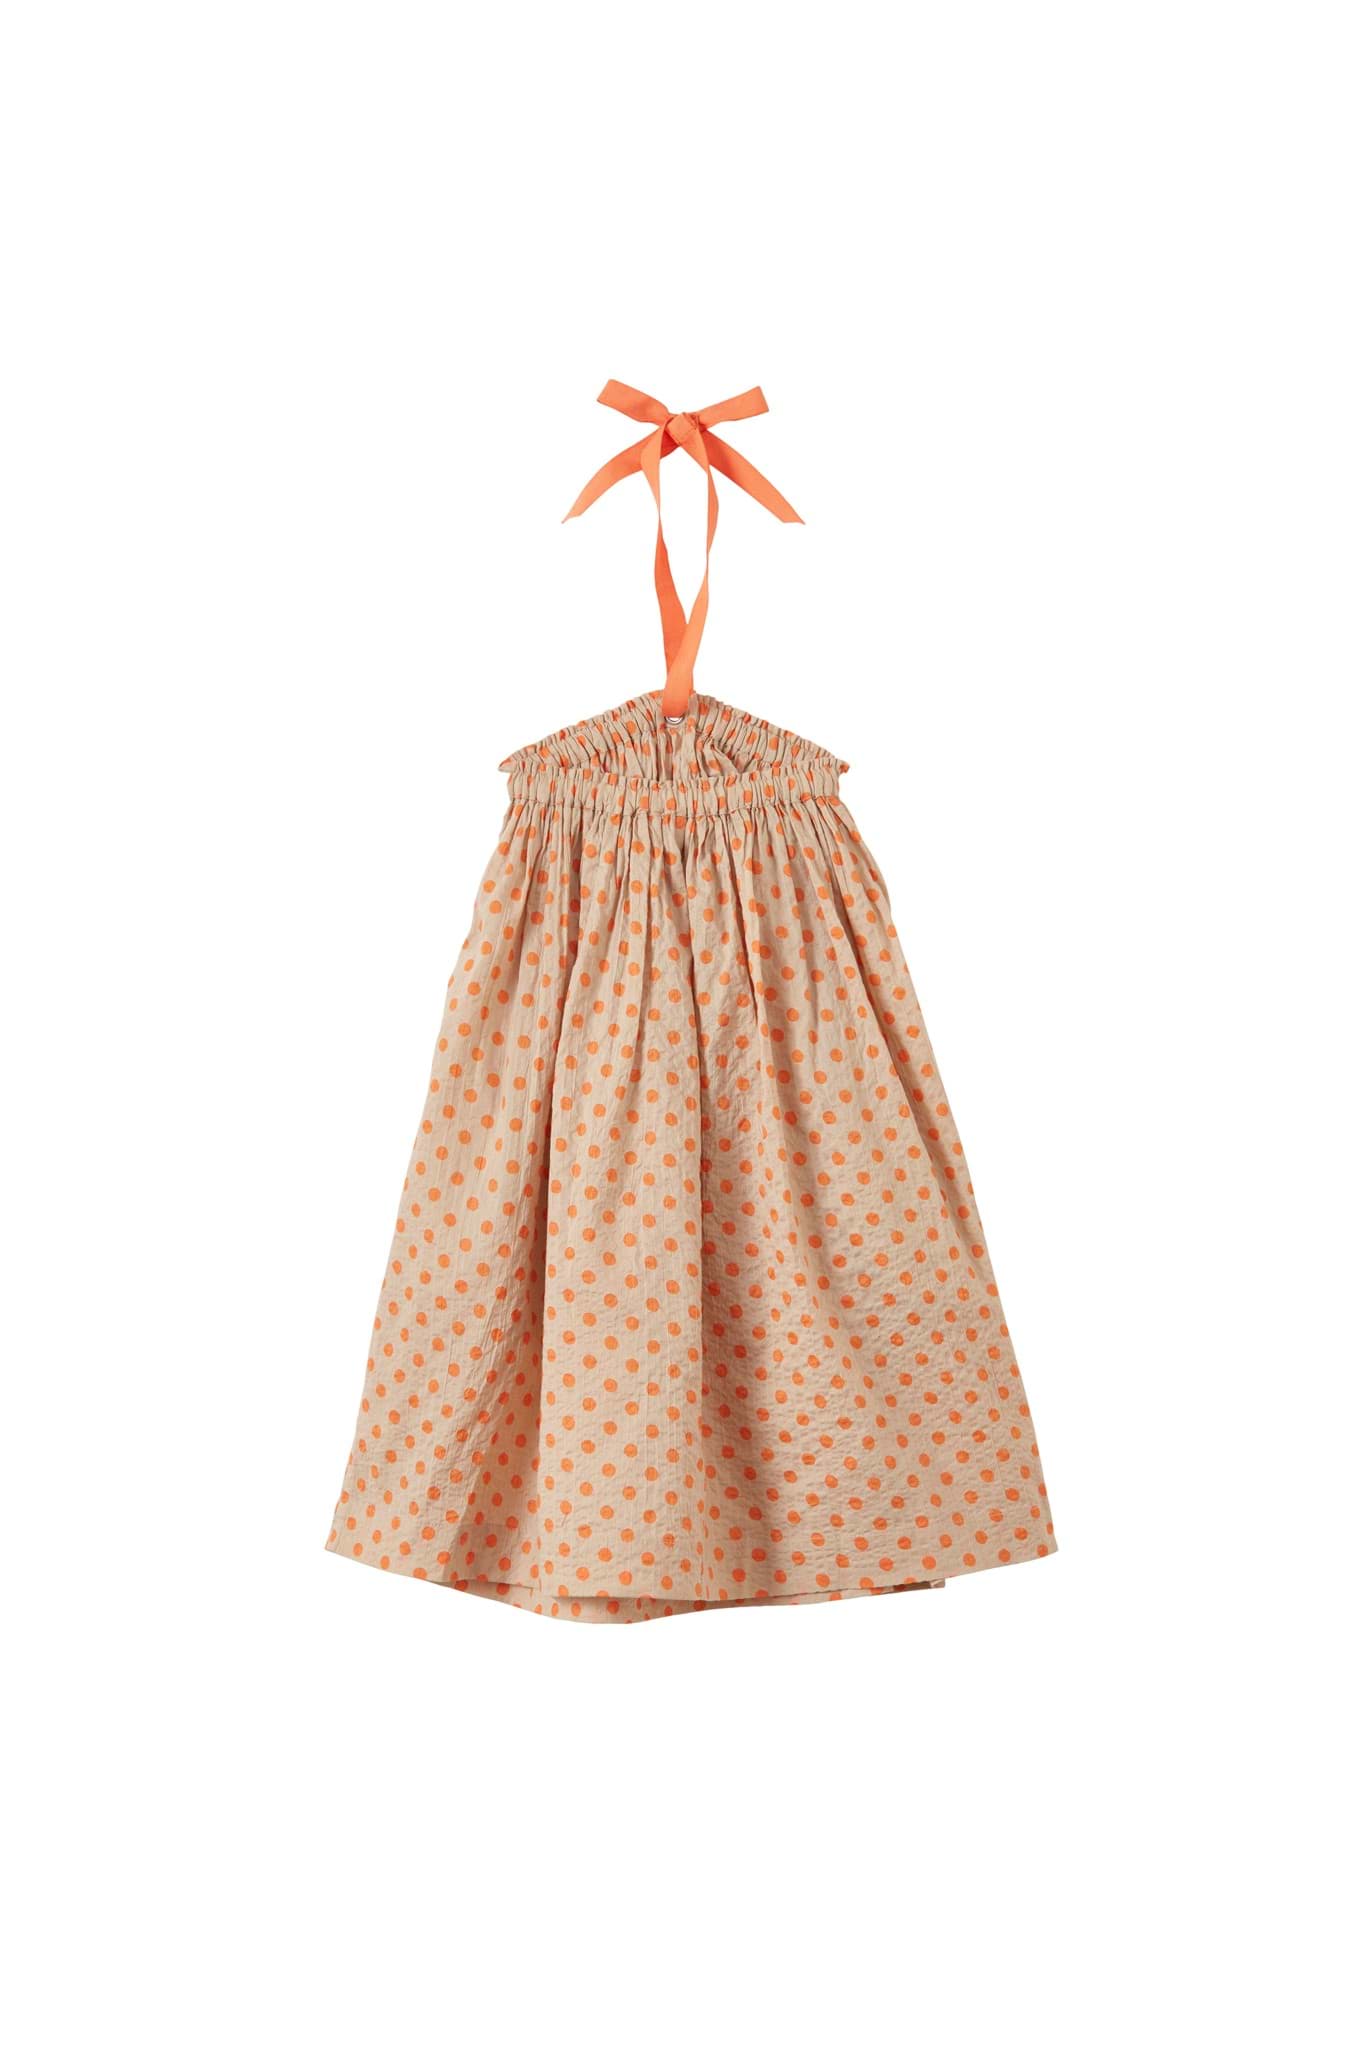 صورة Agave dress (orange polka dot)
